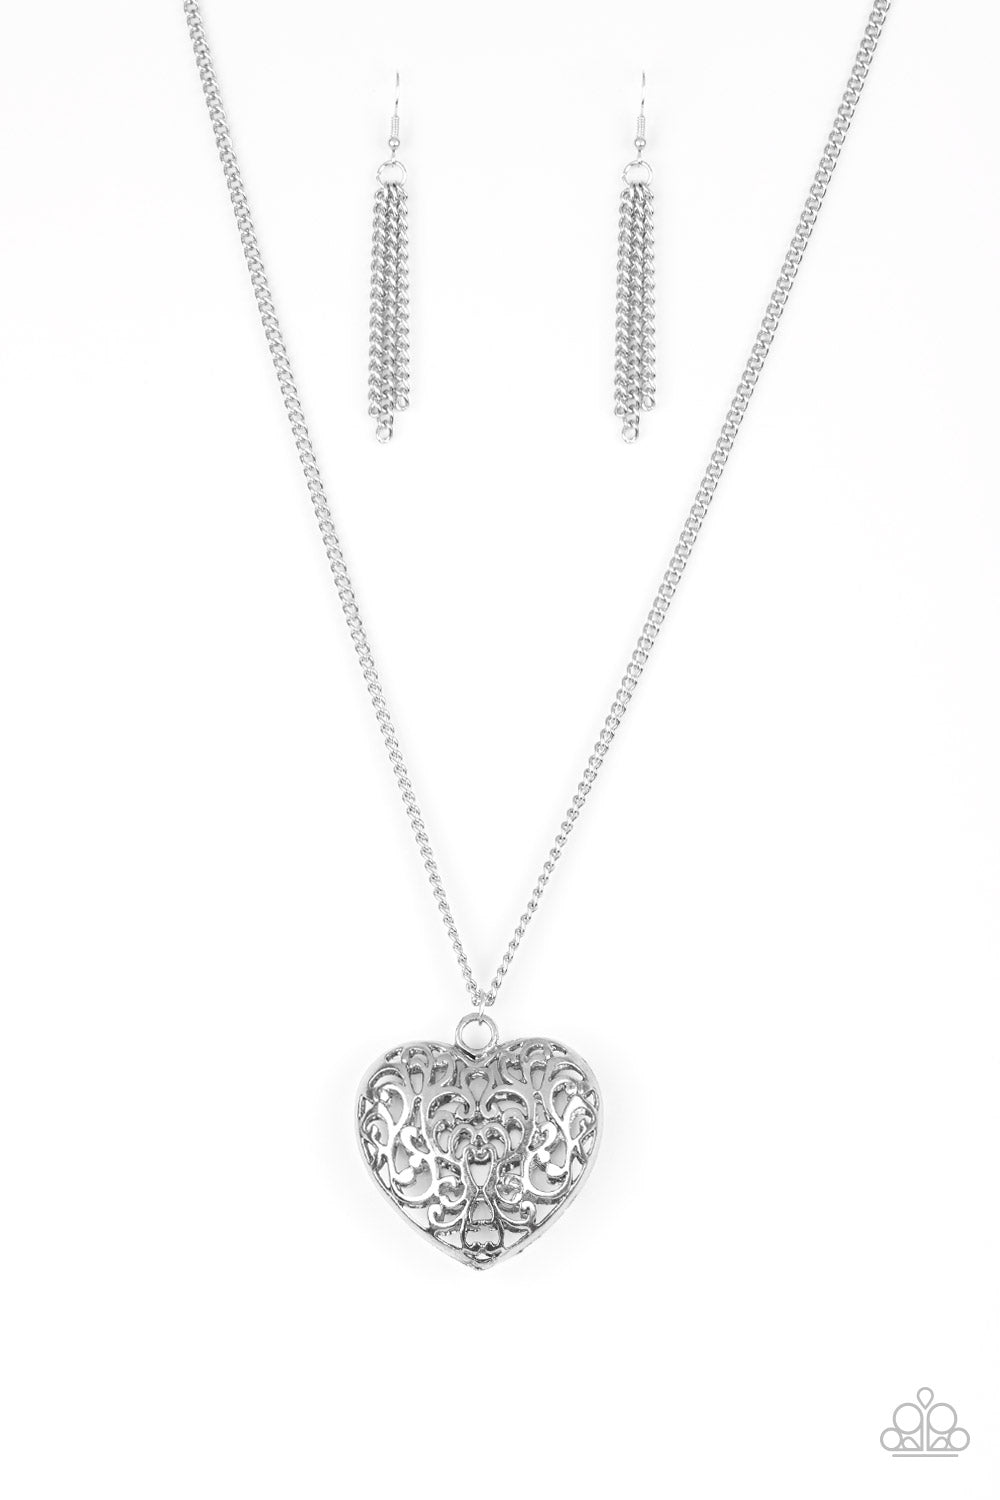 Victorian Virtue - Silver necklace